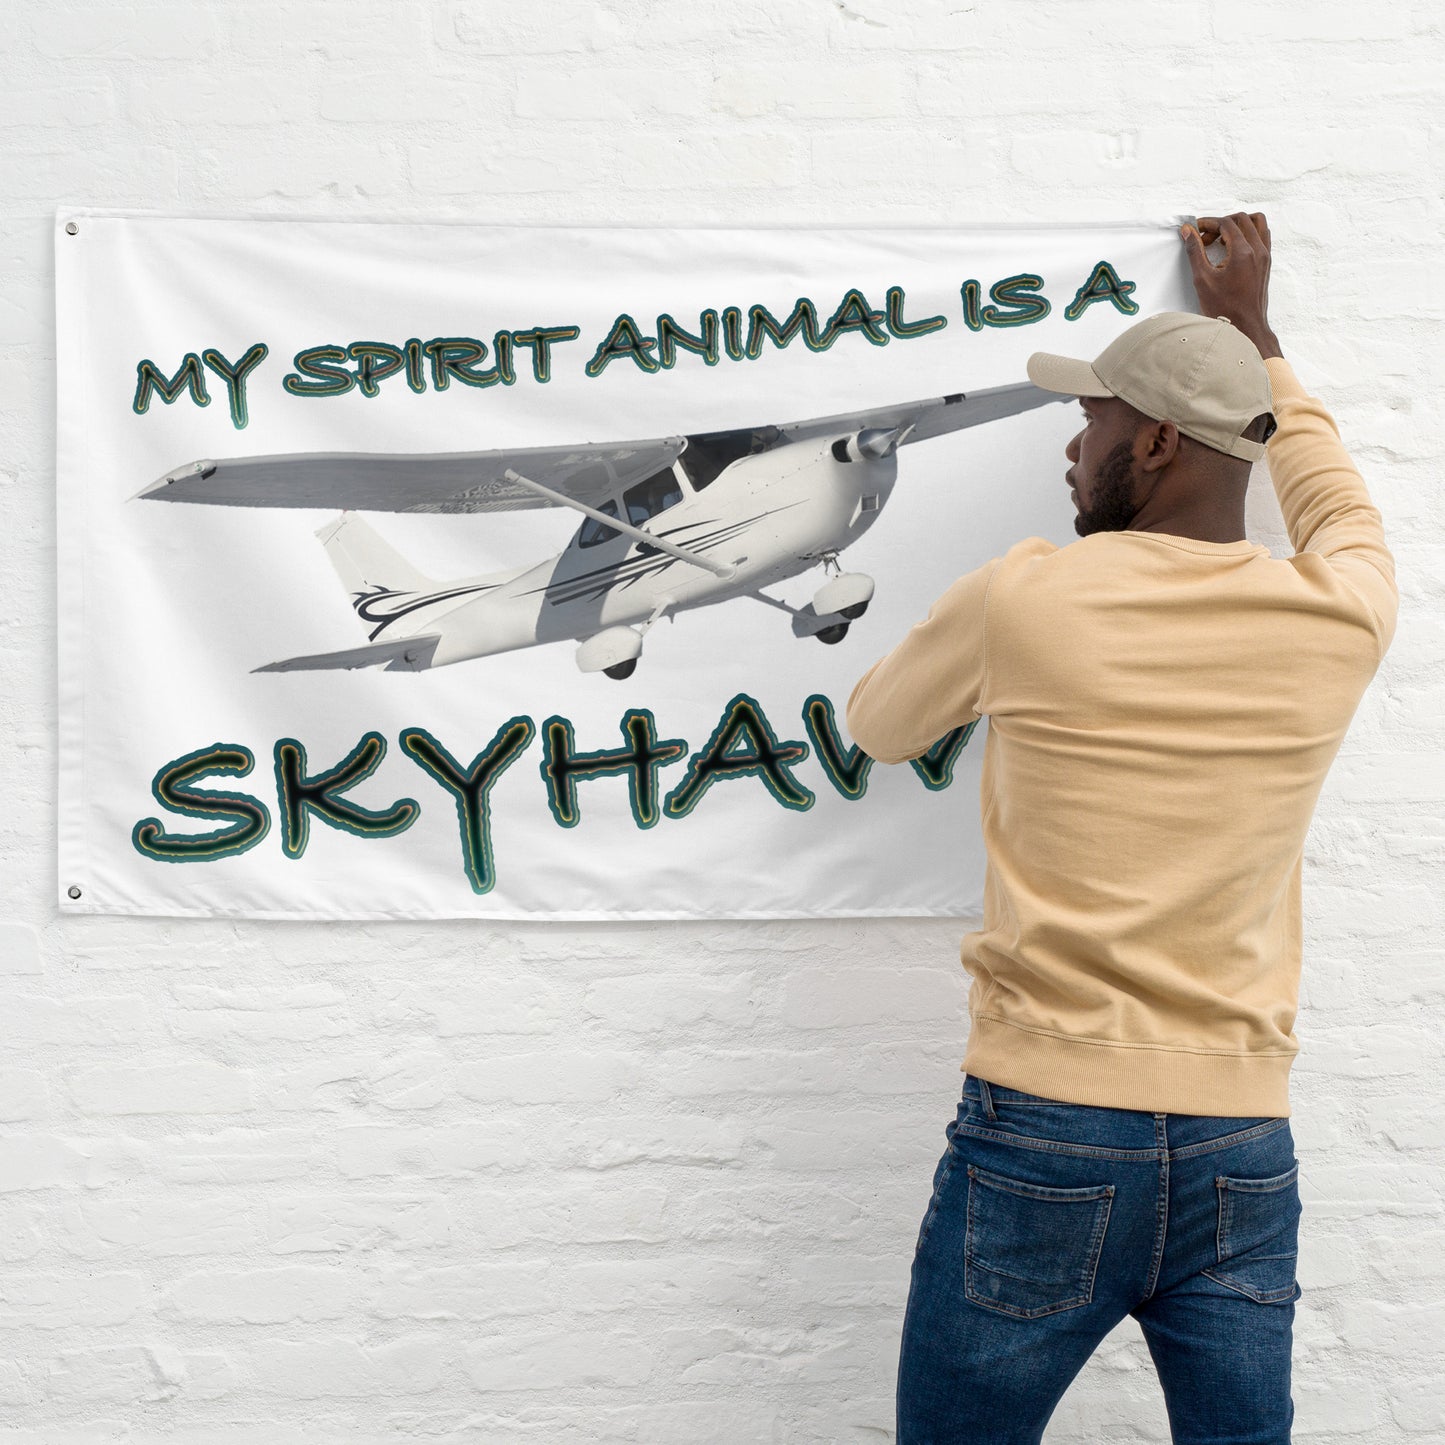 My Spirit Animal is a Skyhawk - flag (d. green)